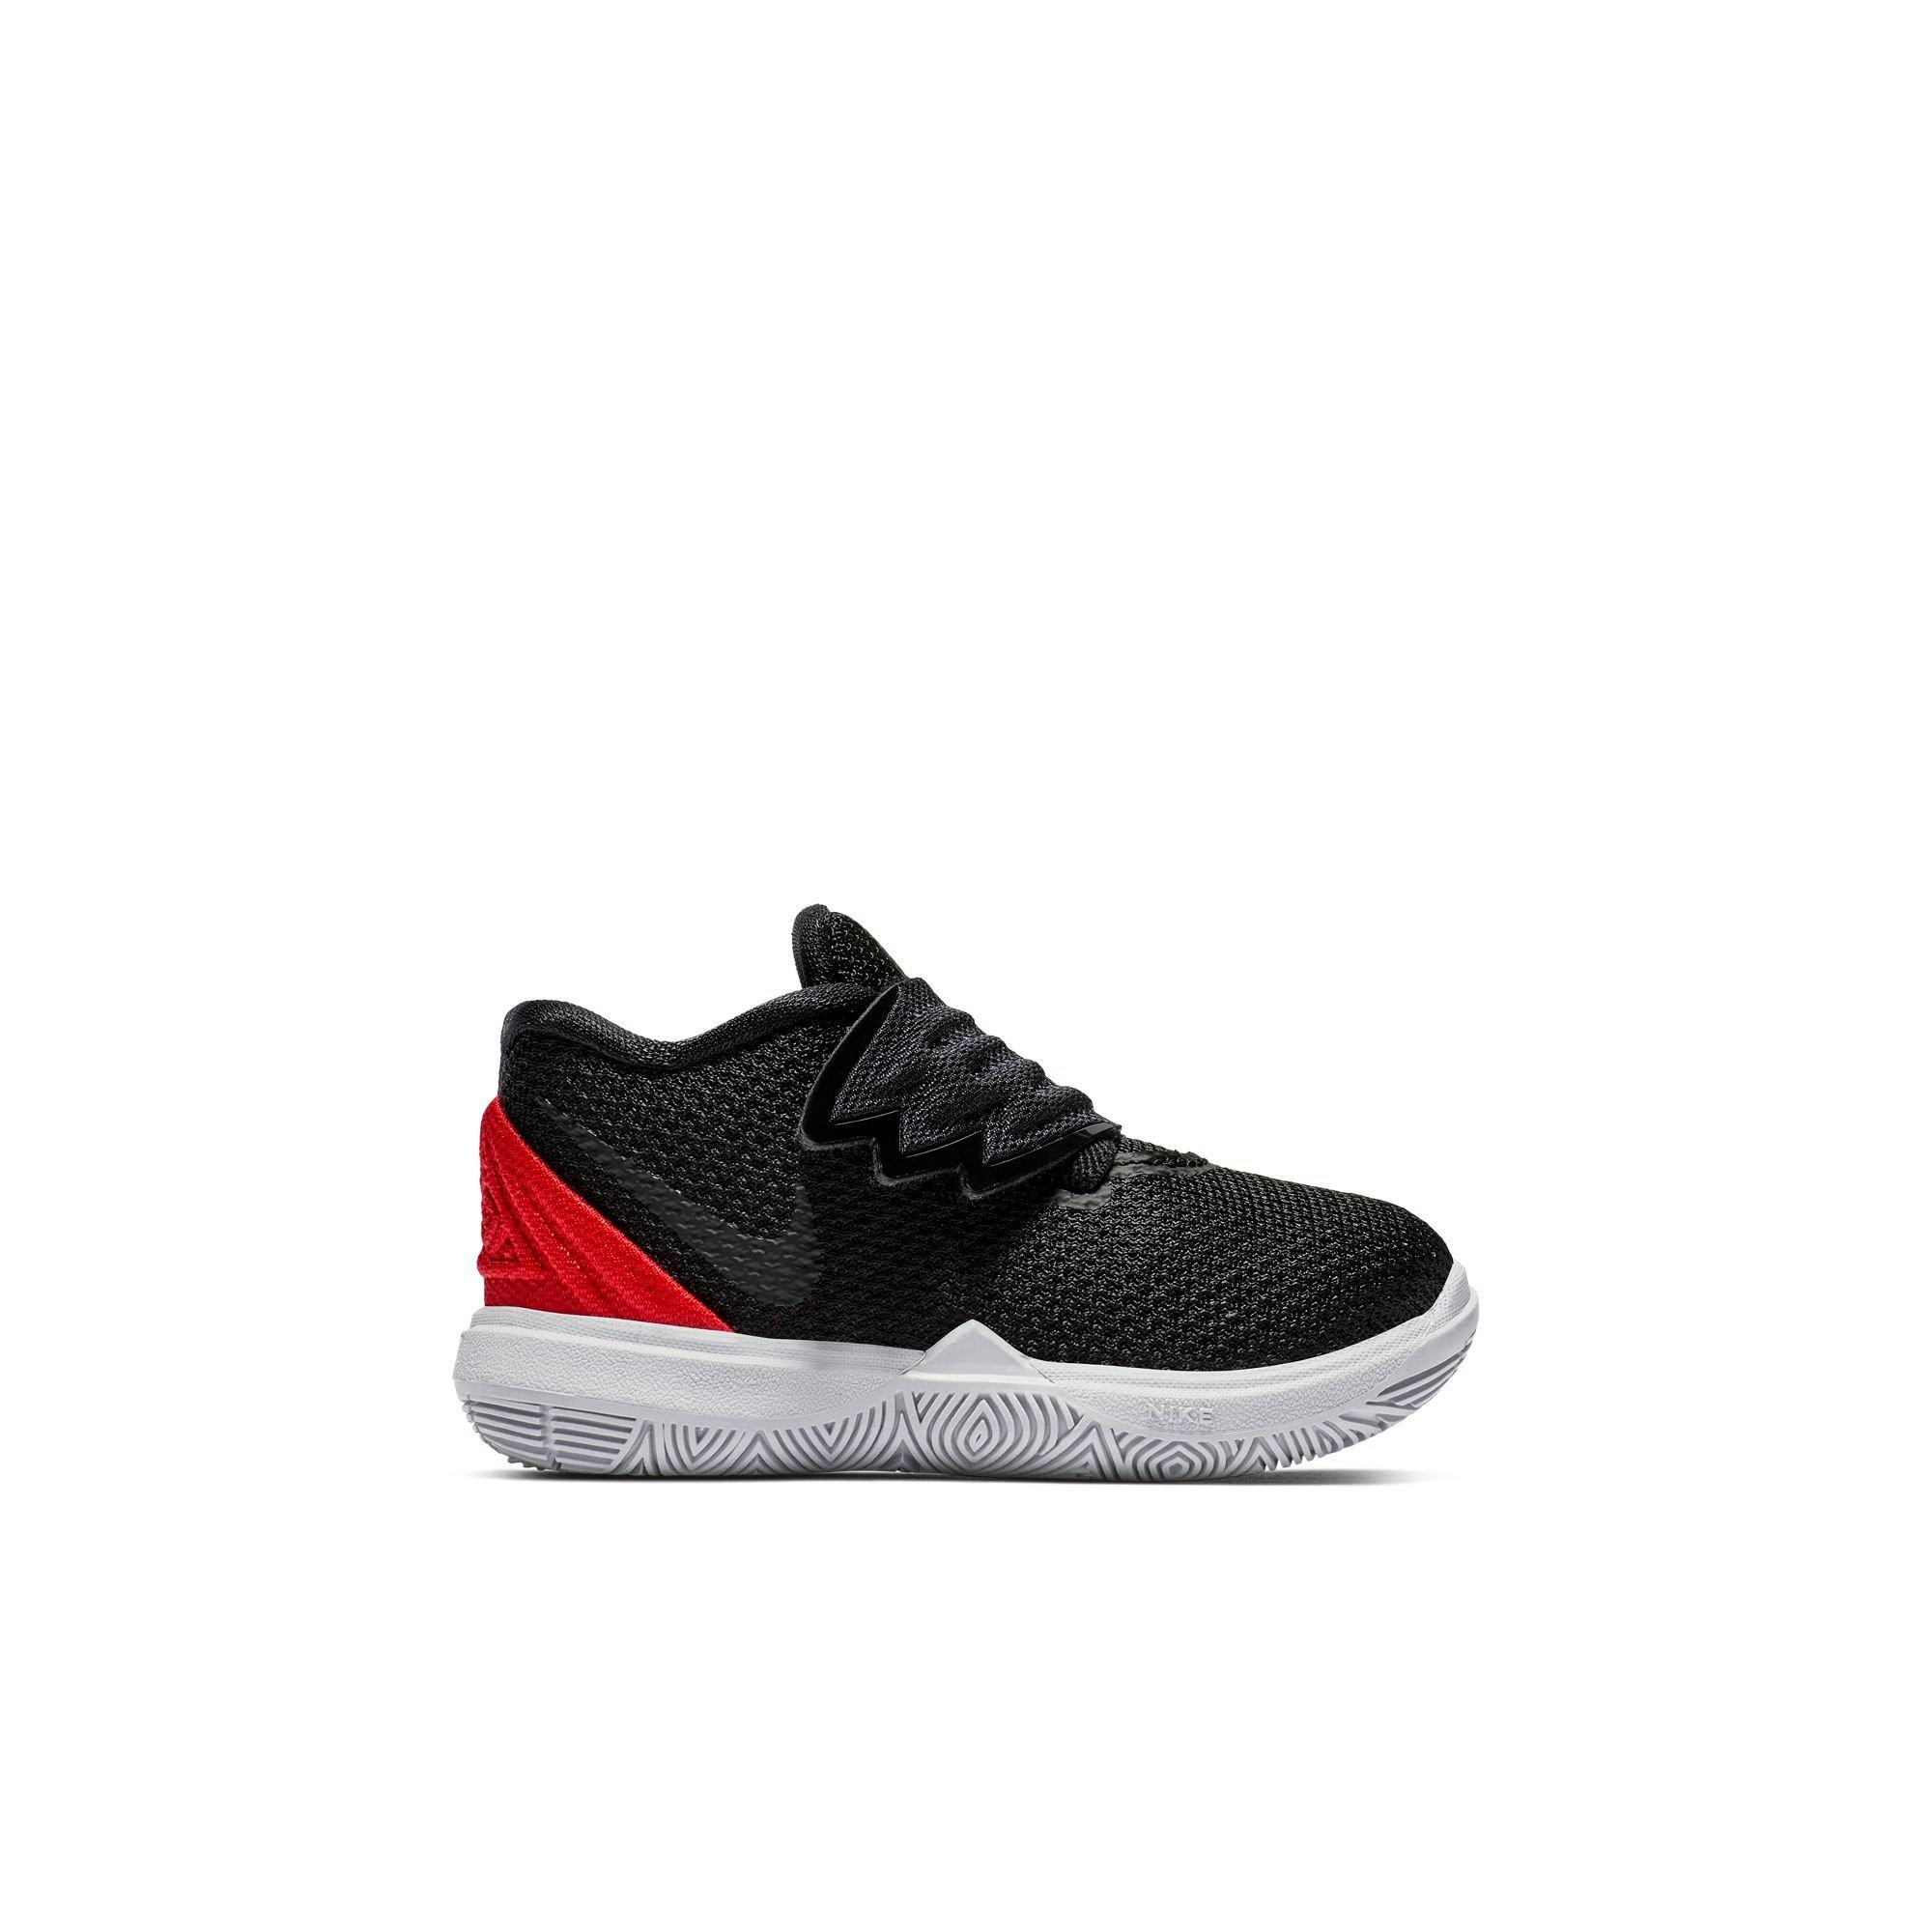  Hot Sale Nike Boys 'Toddler Kyrie 5 Basketball Shoes Black White